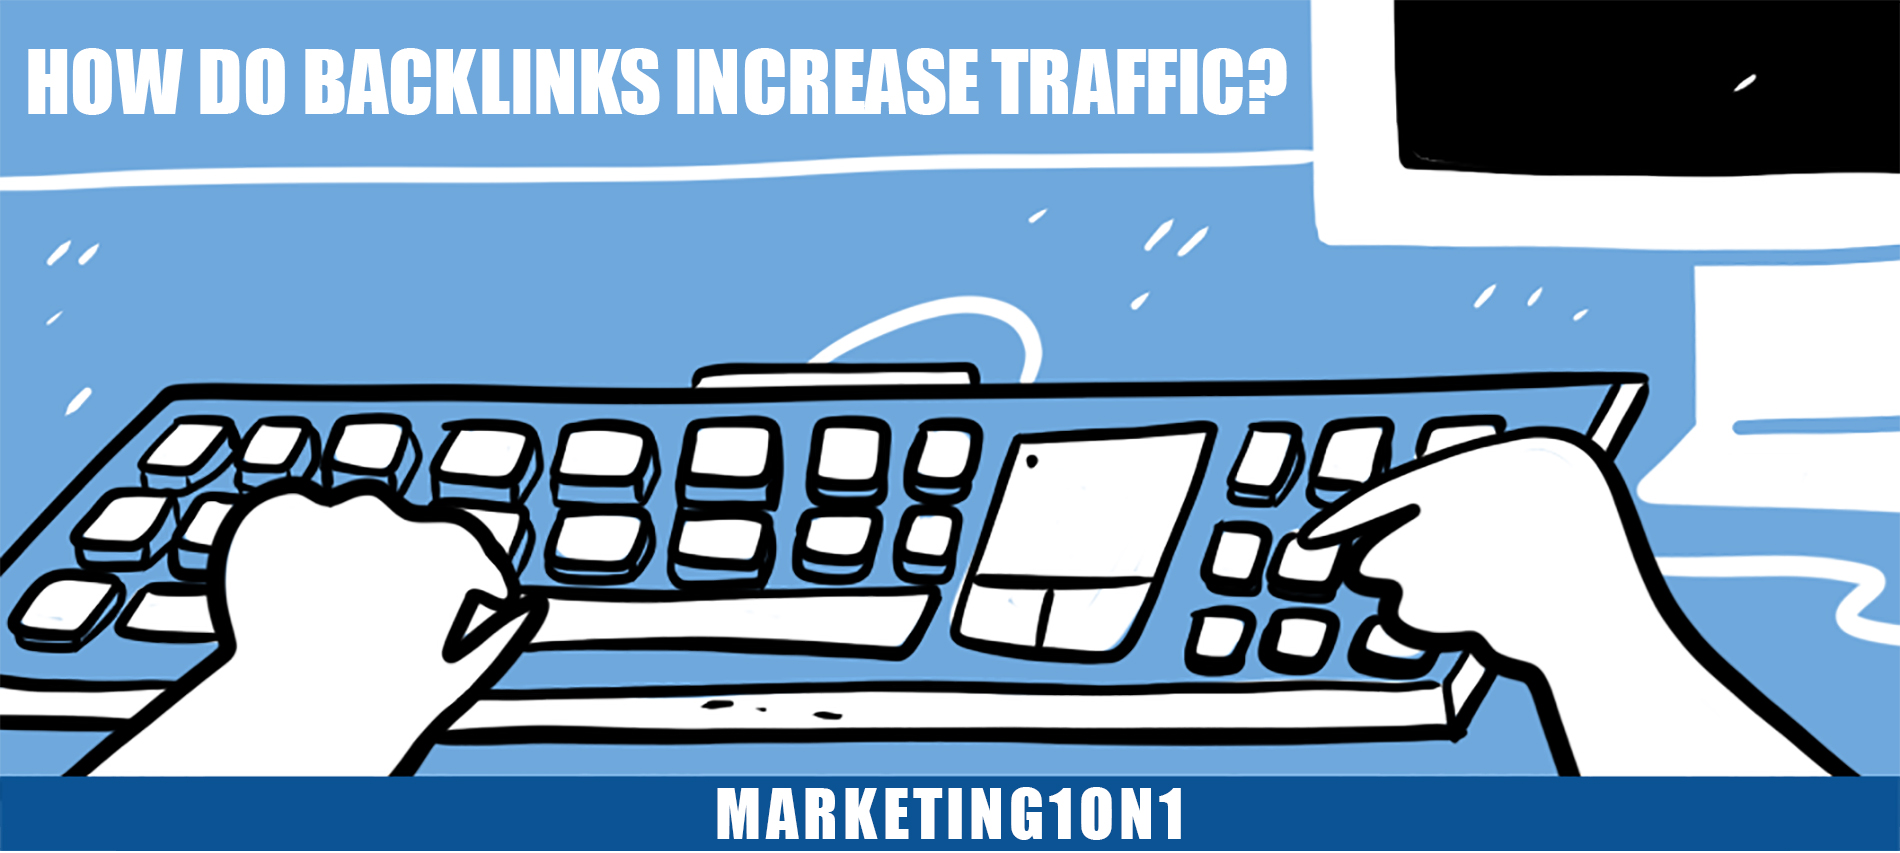 How do backlinks increase traffic?